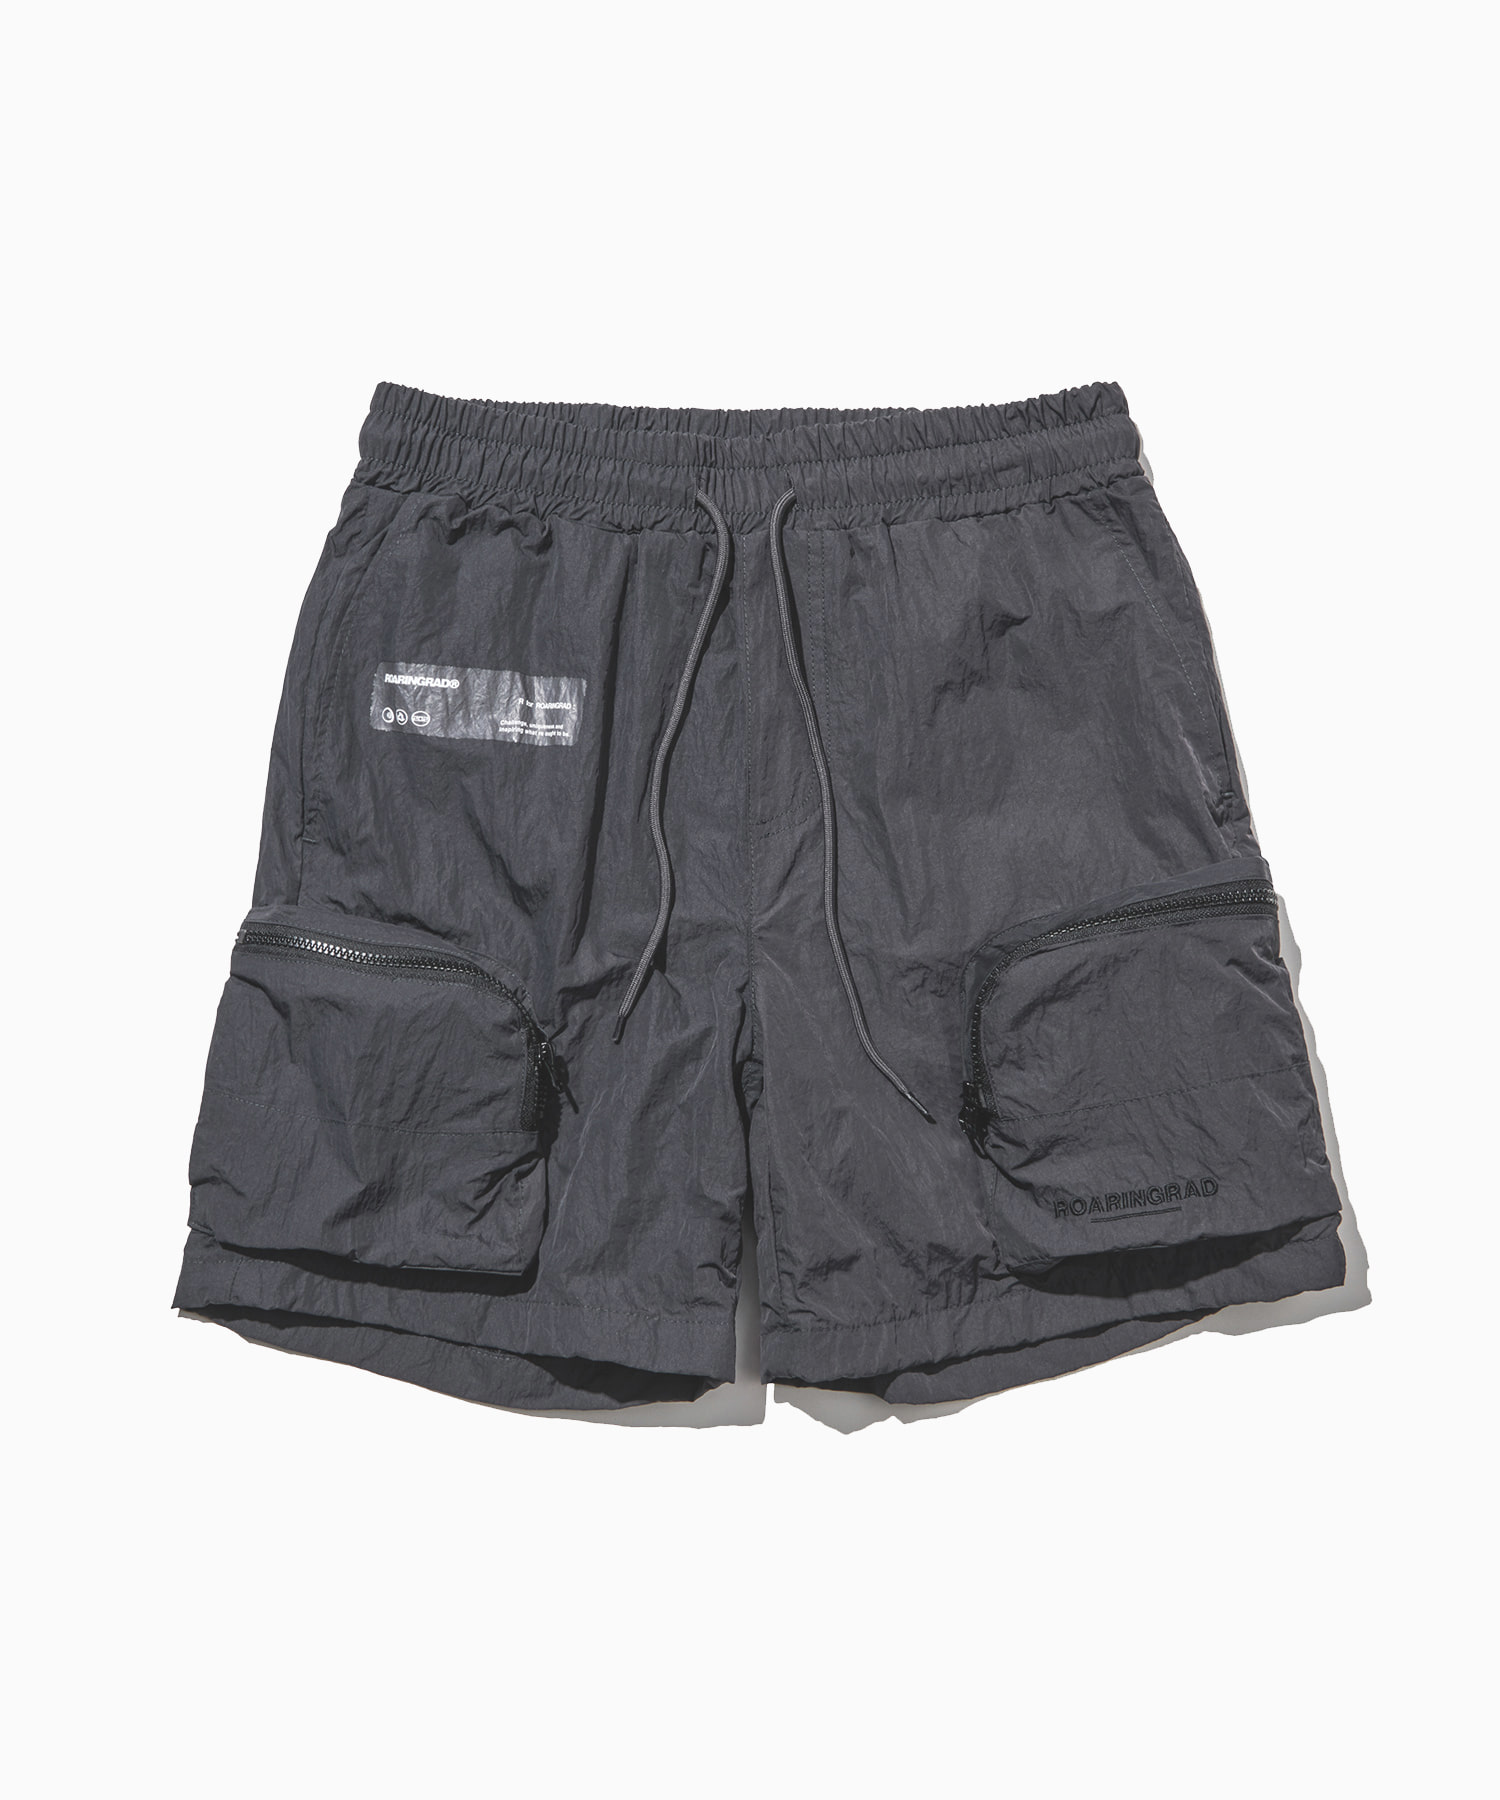 utility short pants charcoal - 로어링라드(ROARINGRAD)